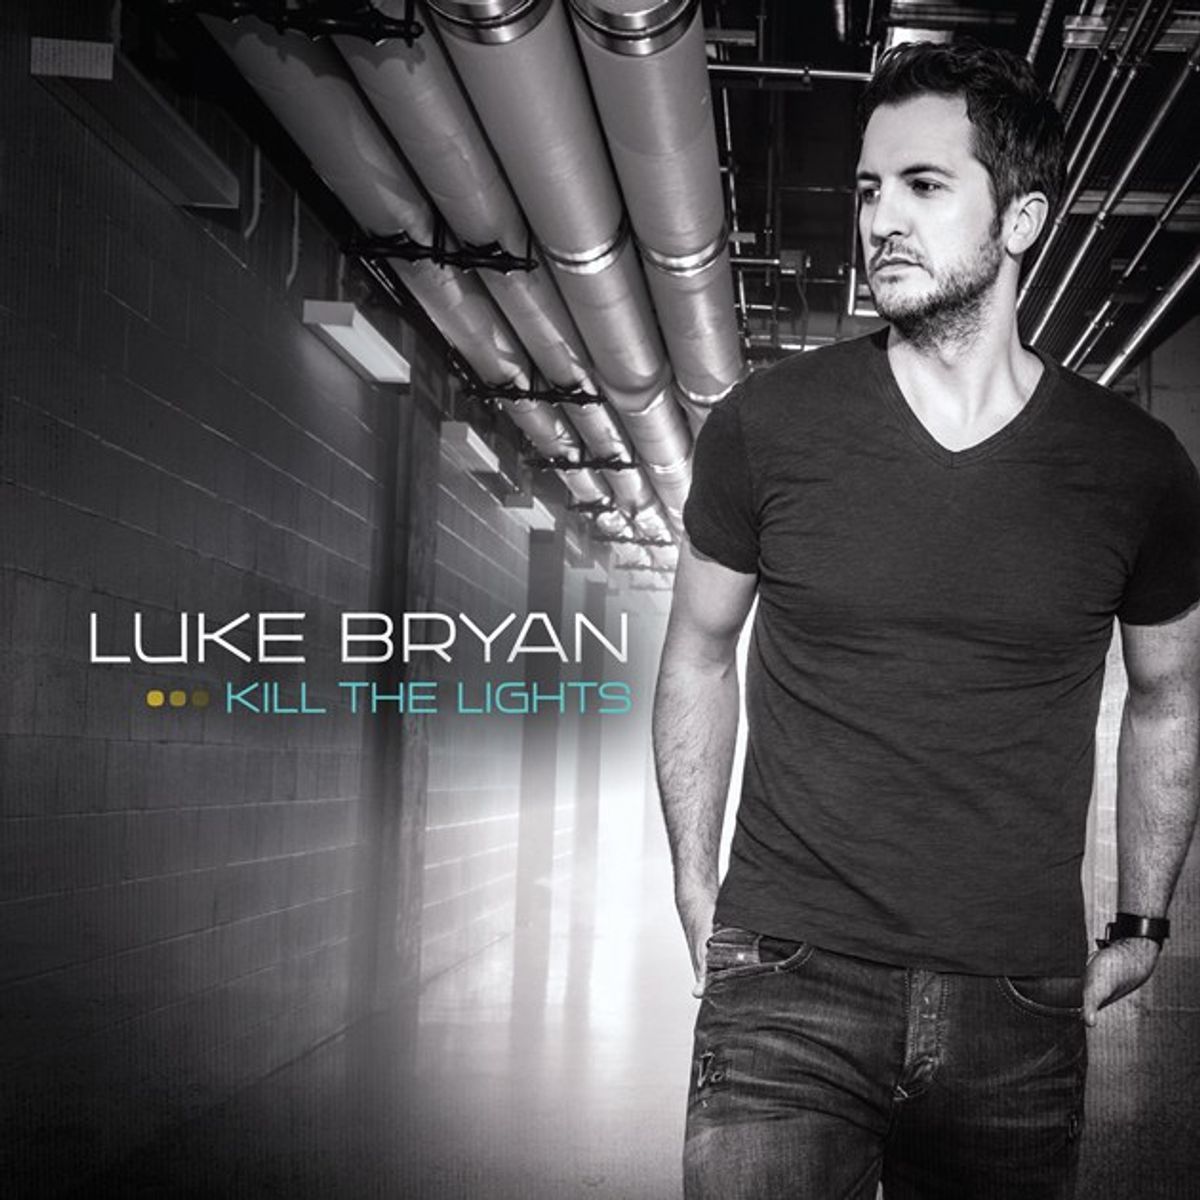 Luke Bryan's 'Kill The Lights' Tour Was Amazing